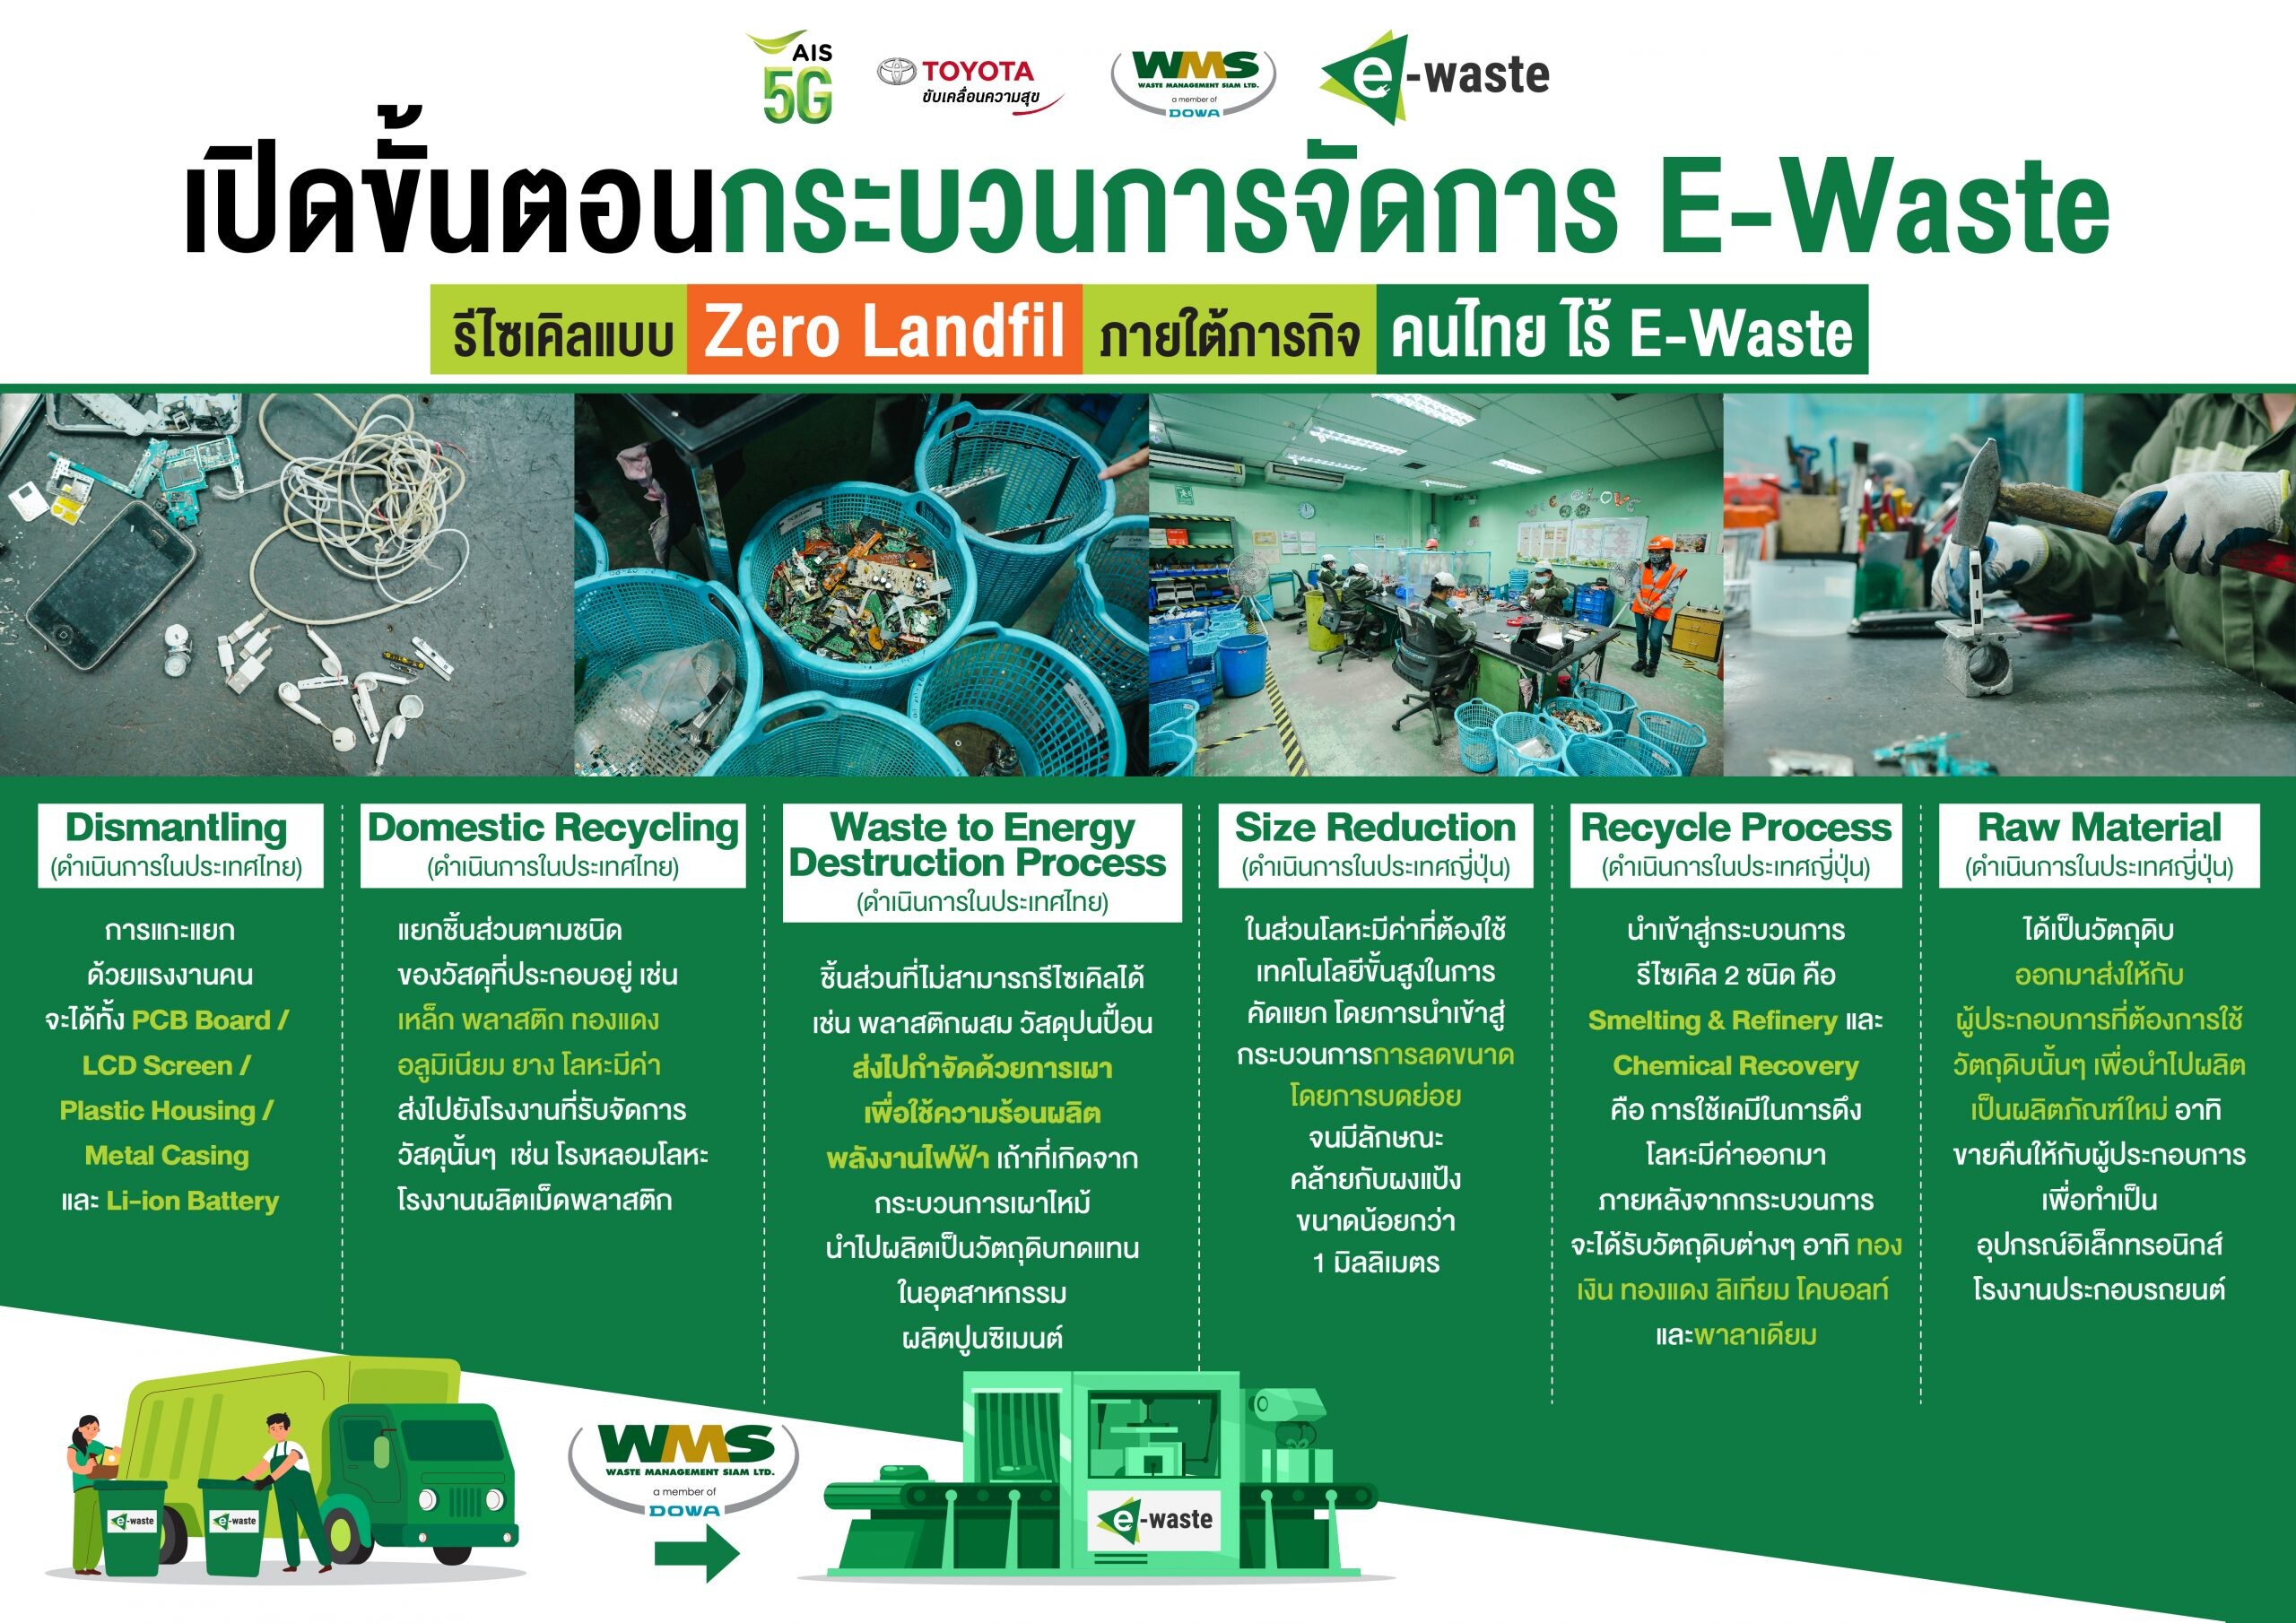 AIS ผนึกกำลัง TOYOTA เดินหน้าภารกิจ "คนไทยไร้ E-Waste" ตั้งเป้านำขยะอิเล็กทรอนิกส์เข้าสู่กระบวนการรีไซเคิลแบบ Zero Landfill